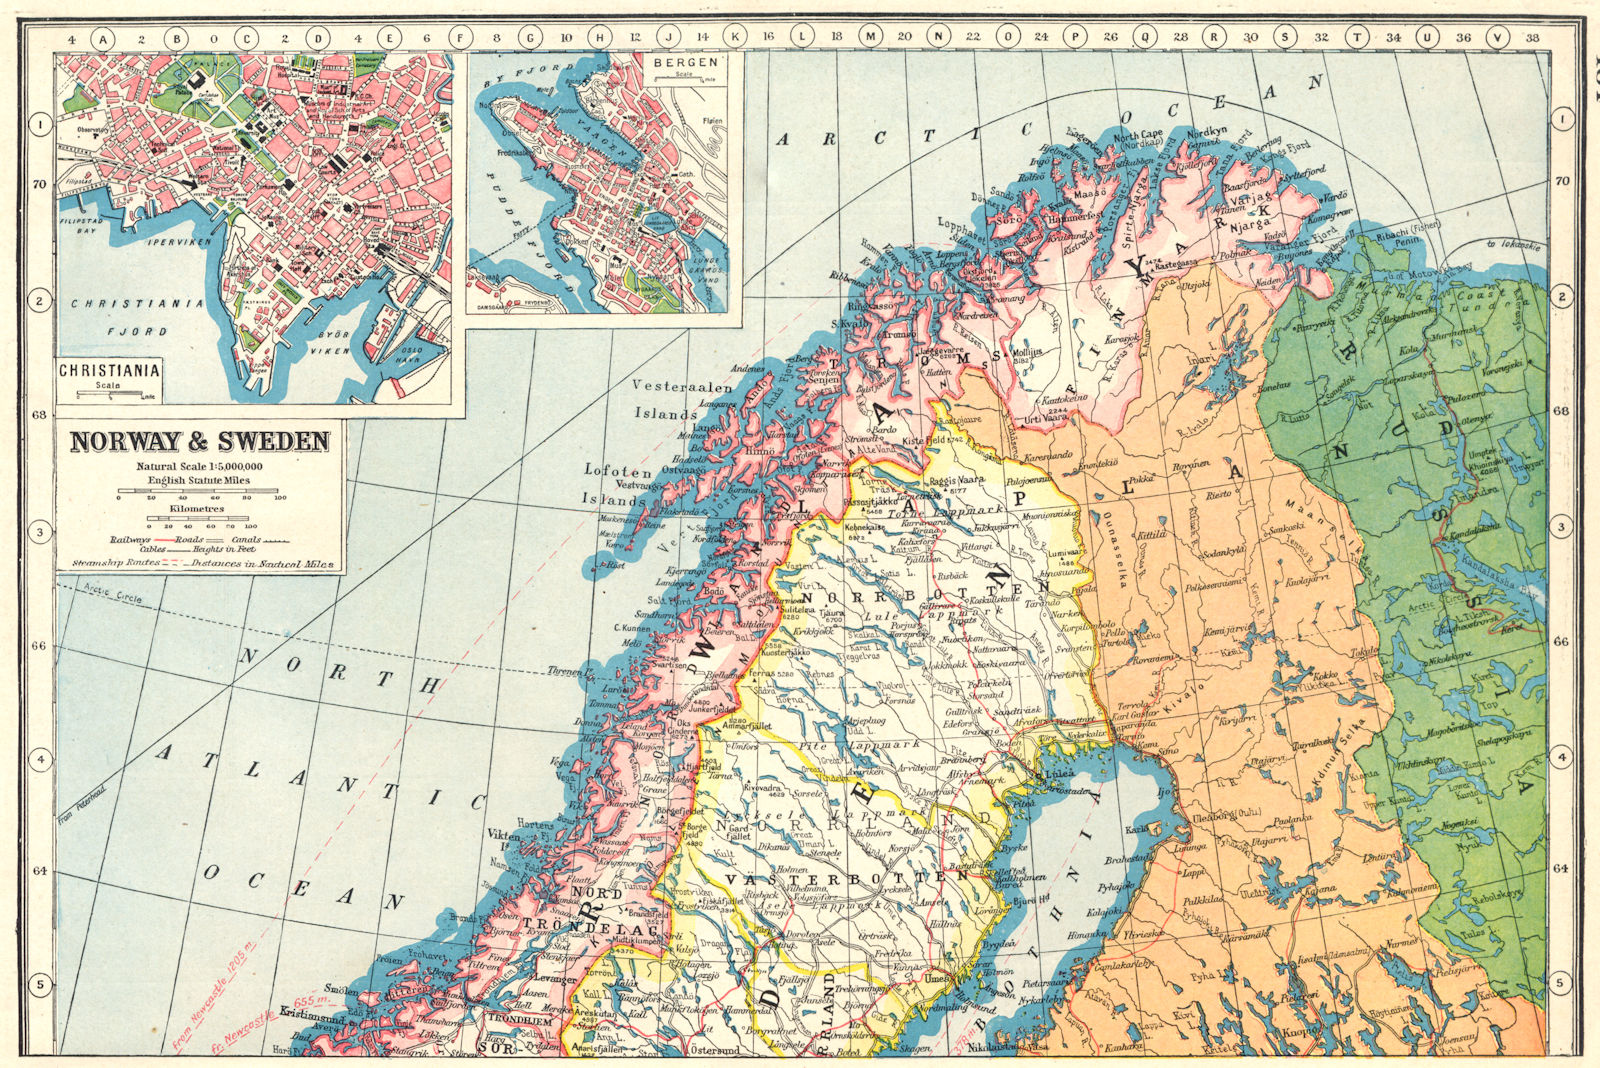 SCANDINAVIA NORTH. Norway & Sweden;inset Oslo Christiania;Bergen 1920 old map